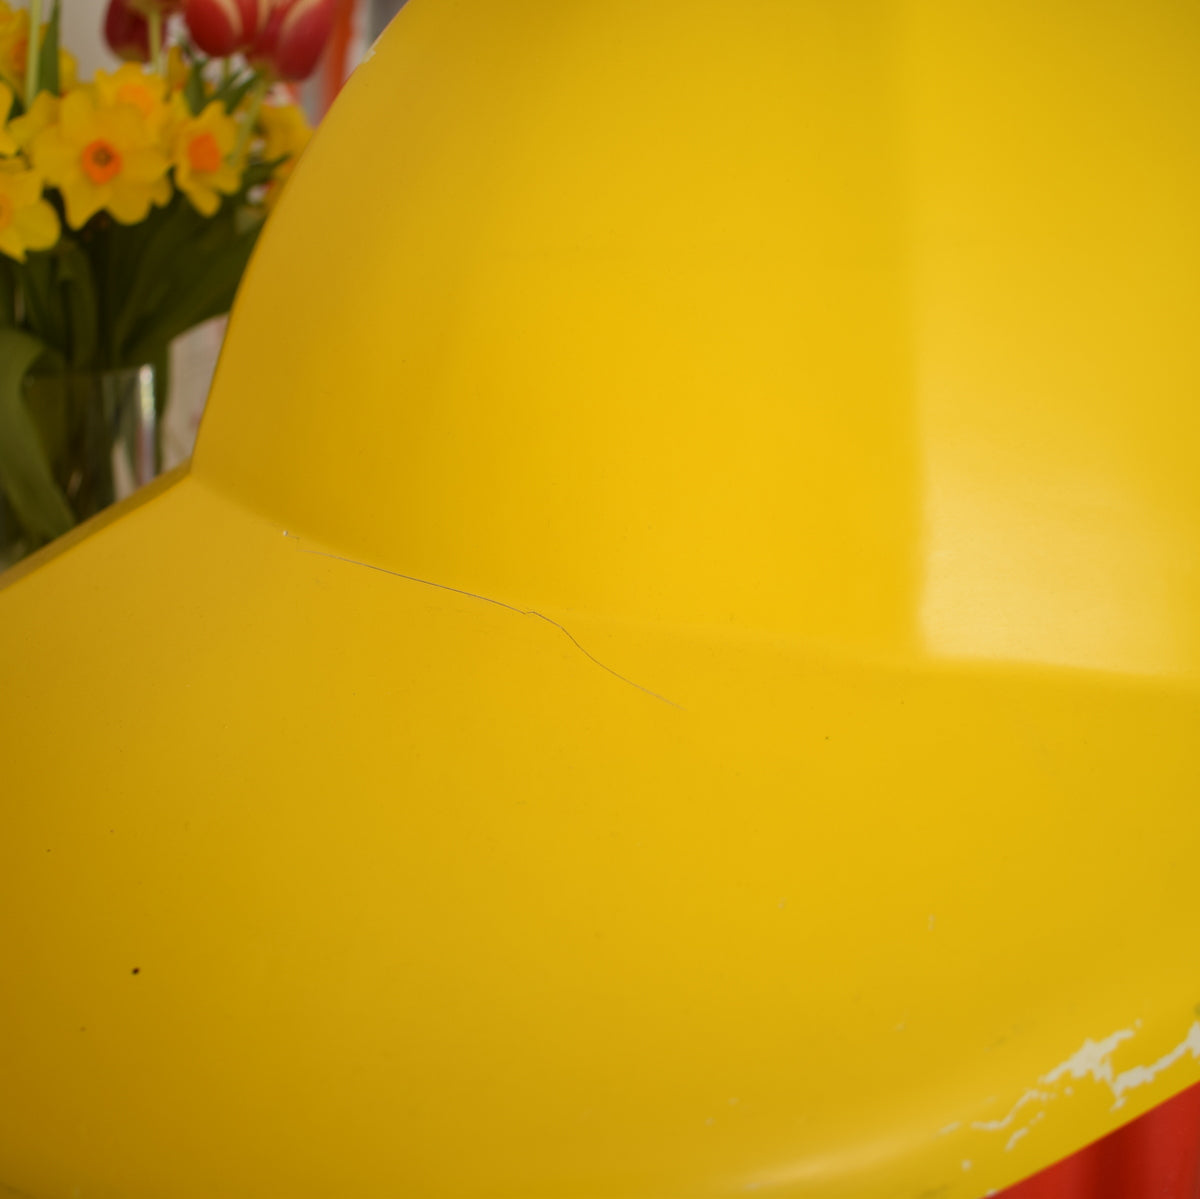 Retro, Kitsch Giant Playmobil Clown Shop Retail Figure - 5ft Hight